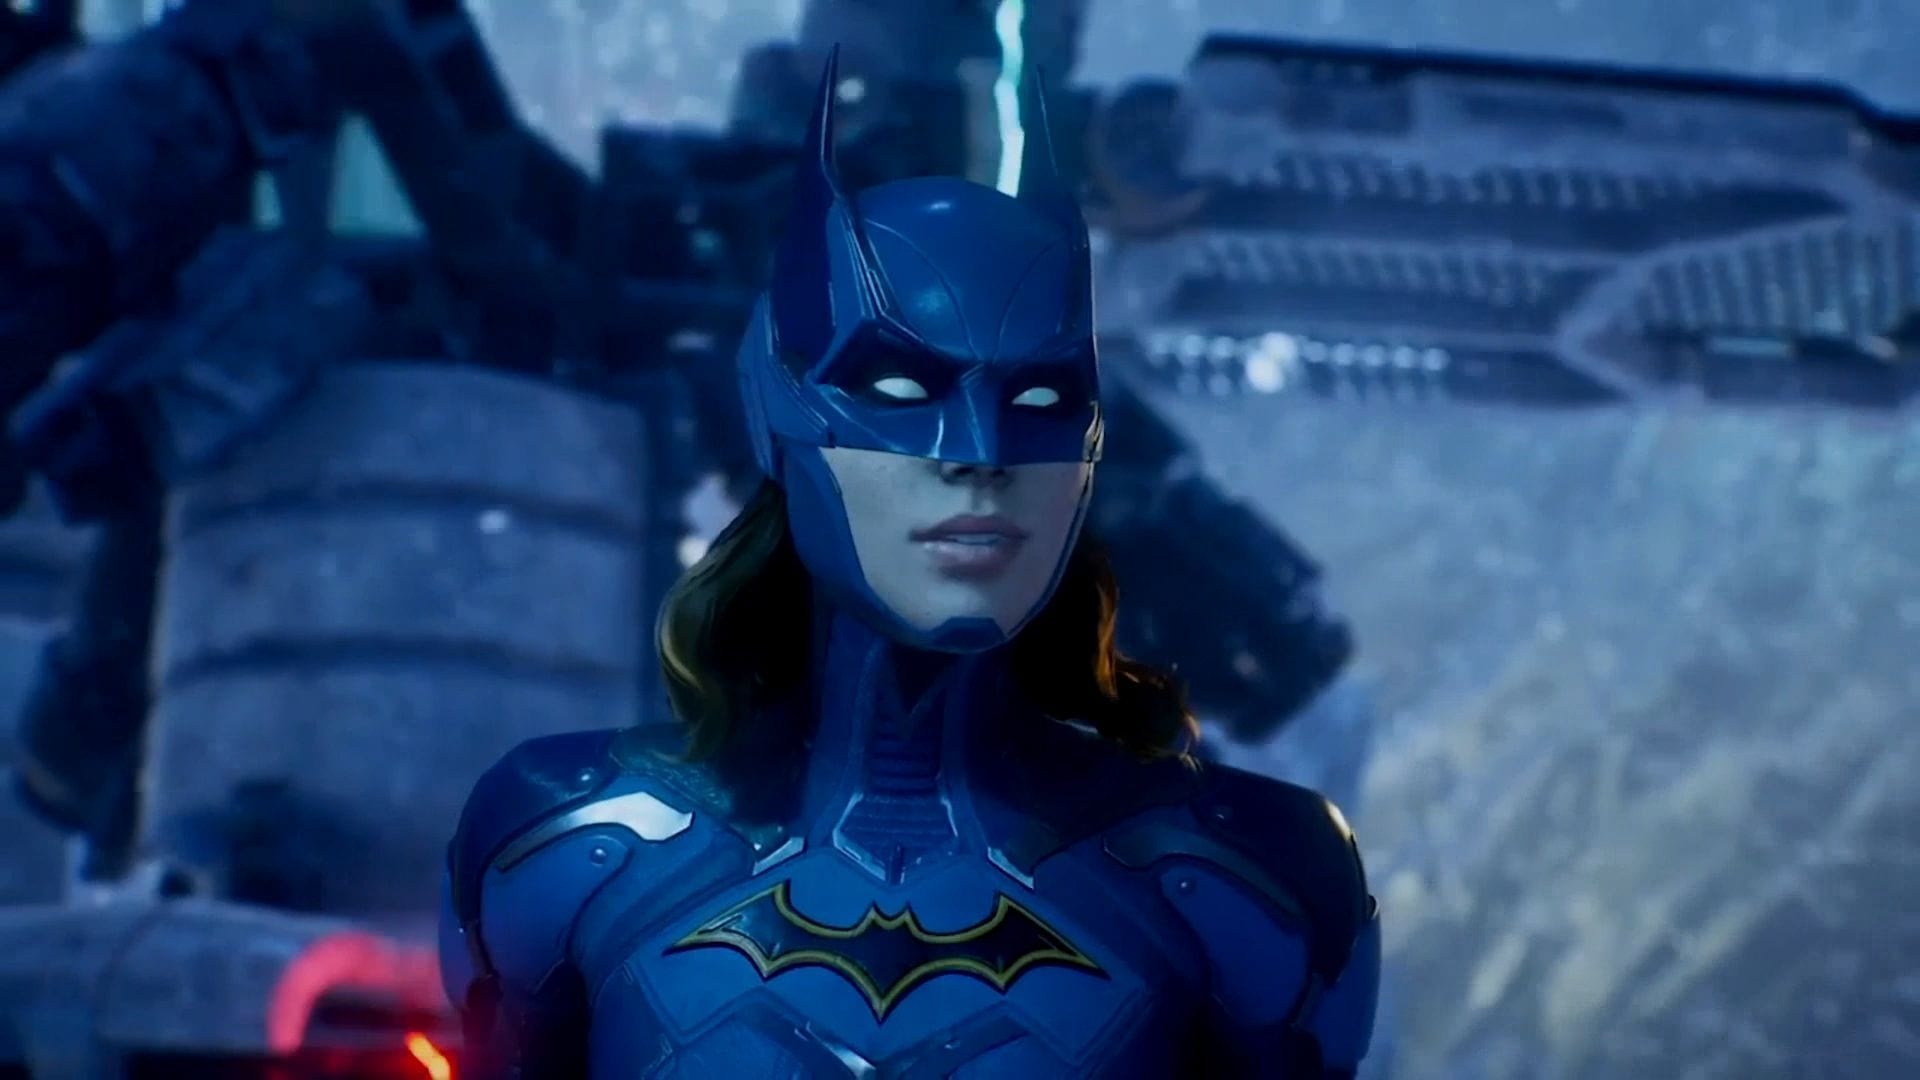 Gotham Knights (Game): Batgirl, Barbara Gordon, Signature weapon is the tonfa. 1920x1080 Full HD Background.